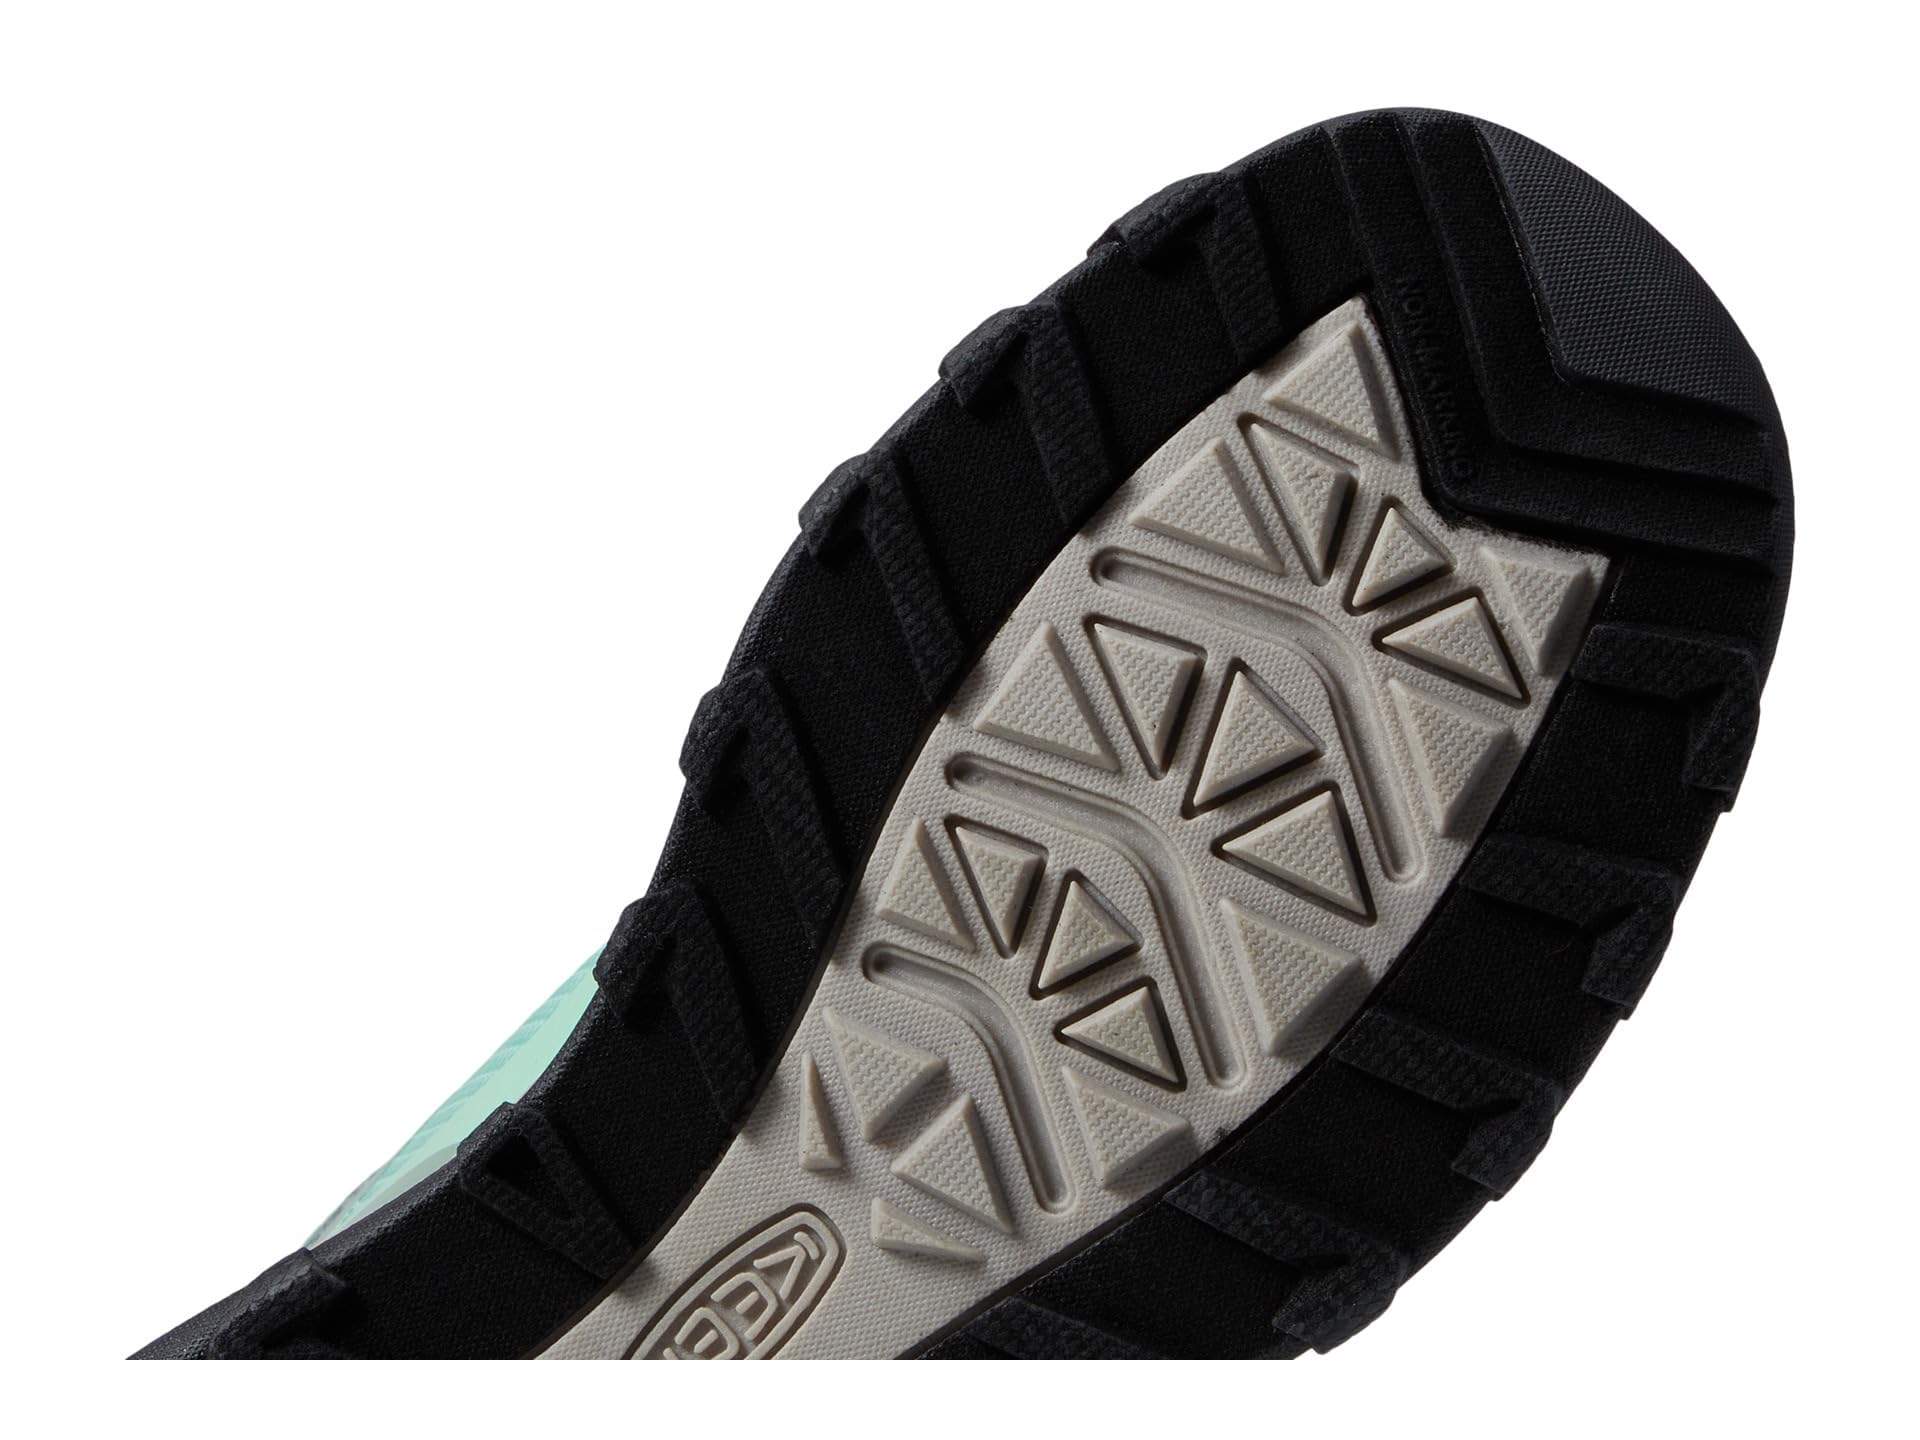 KEEN Wanduro Mid Height Waterproof Easy On Durable Sneaker Hiking Boots, Granite Green/Ibis Rose, 13 US Unisex Little Kid